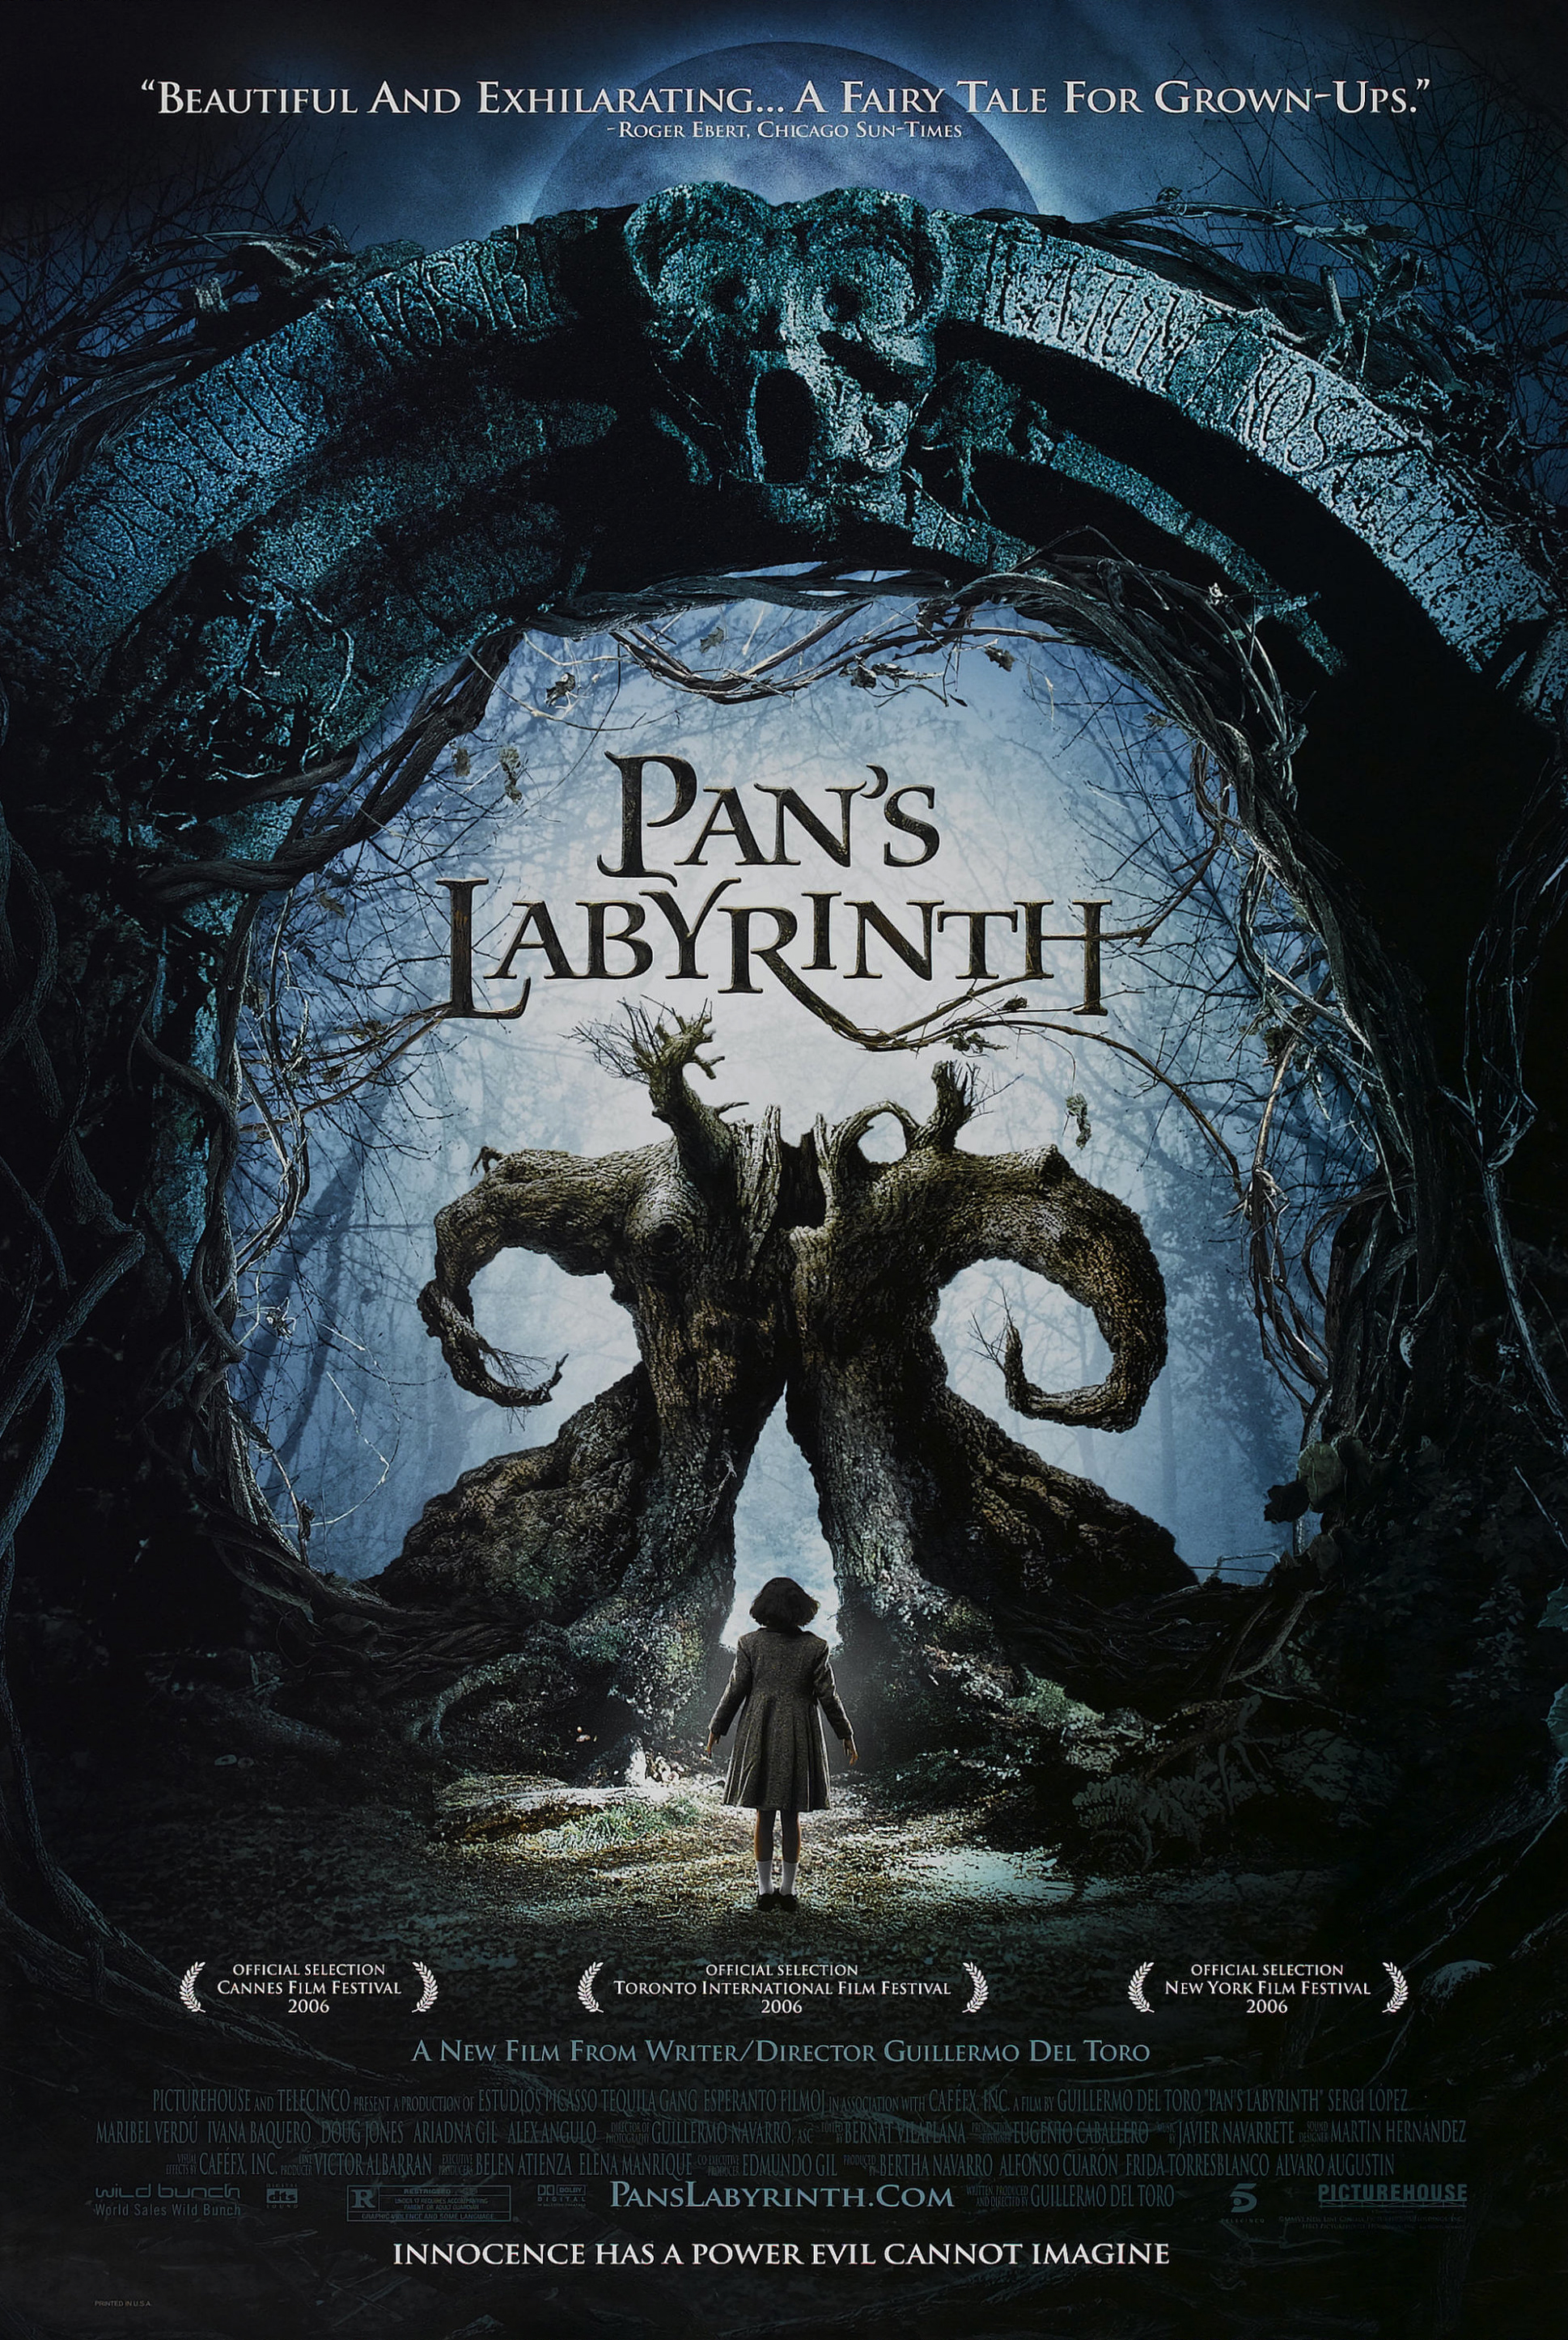 PAN'S LABYRINTH - ფავნის ლაბირინთი